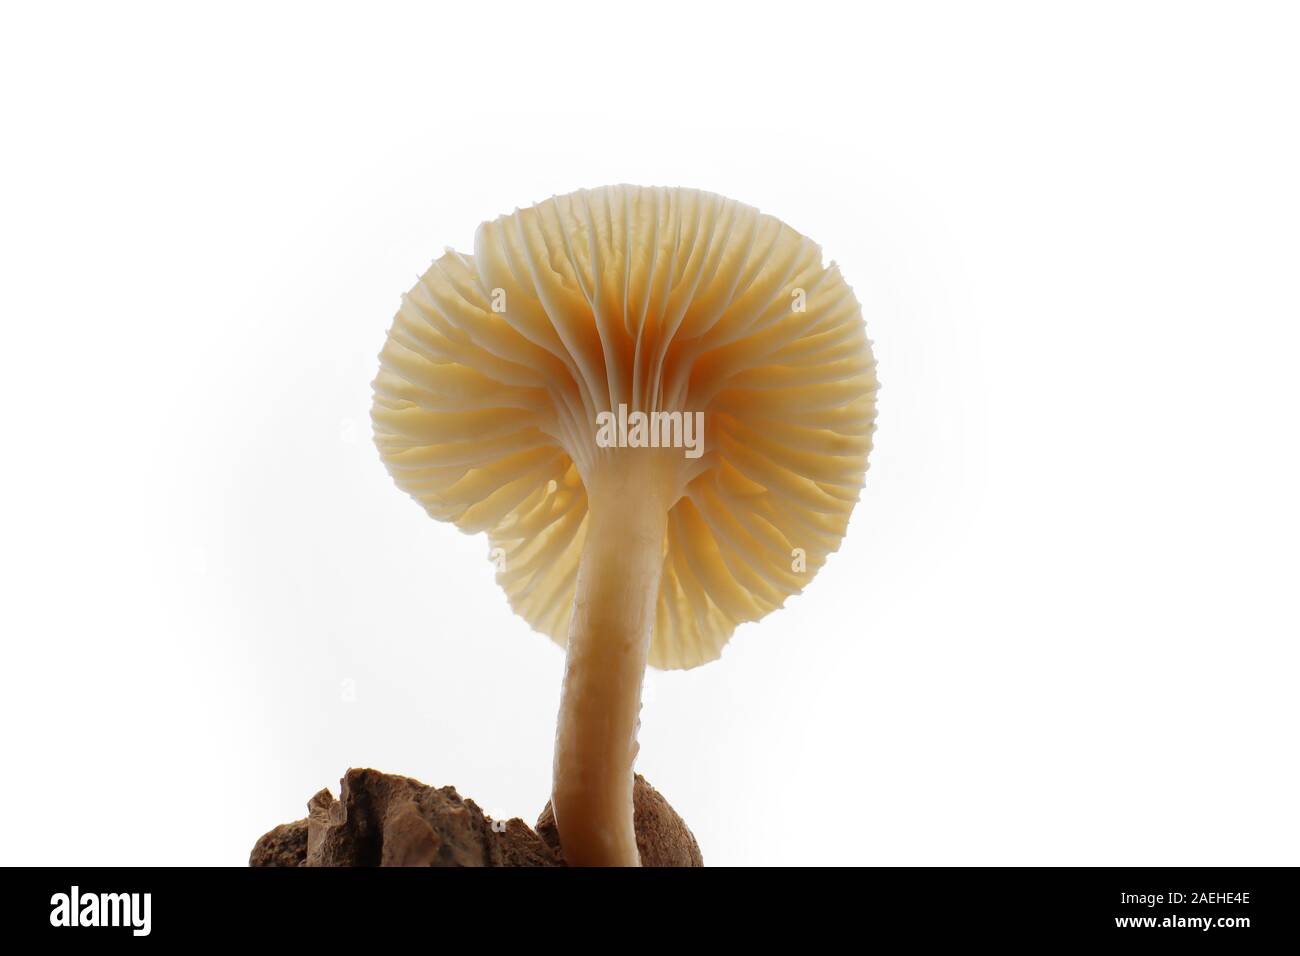 Poisonous mushroom on a white background Stock Photo